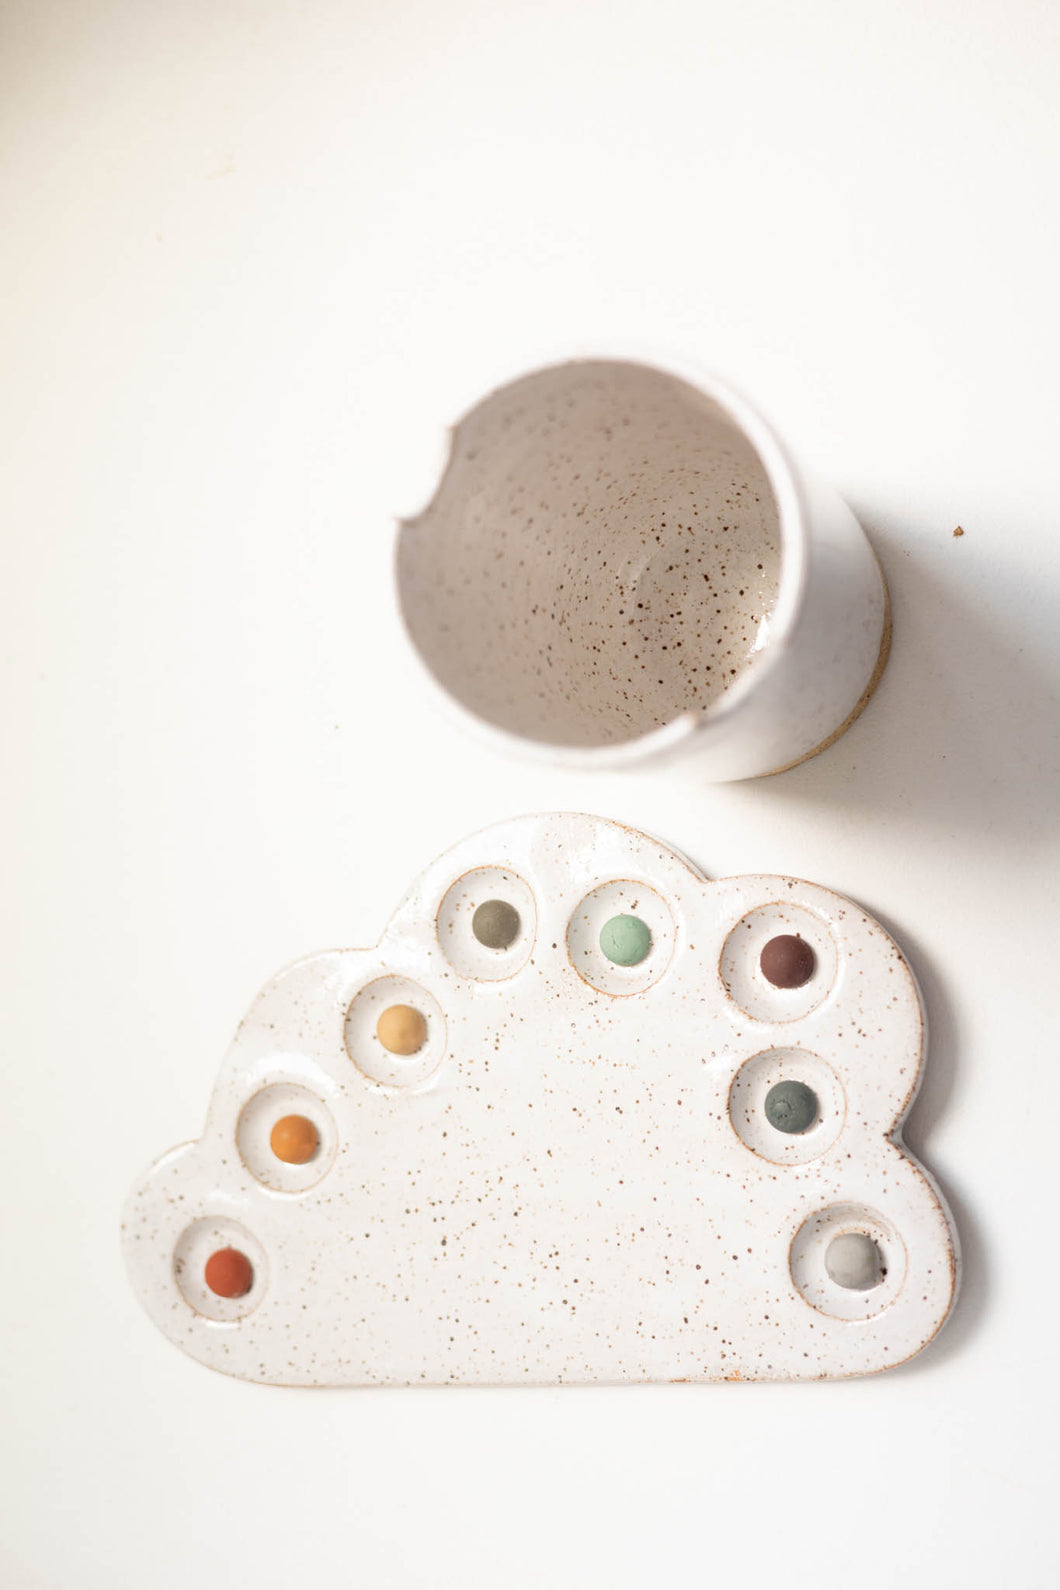 miss painterly simple mixing cloud palette set: handmade ceramic painting palette